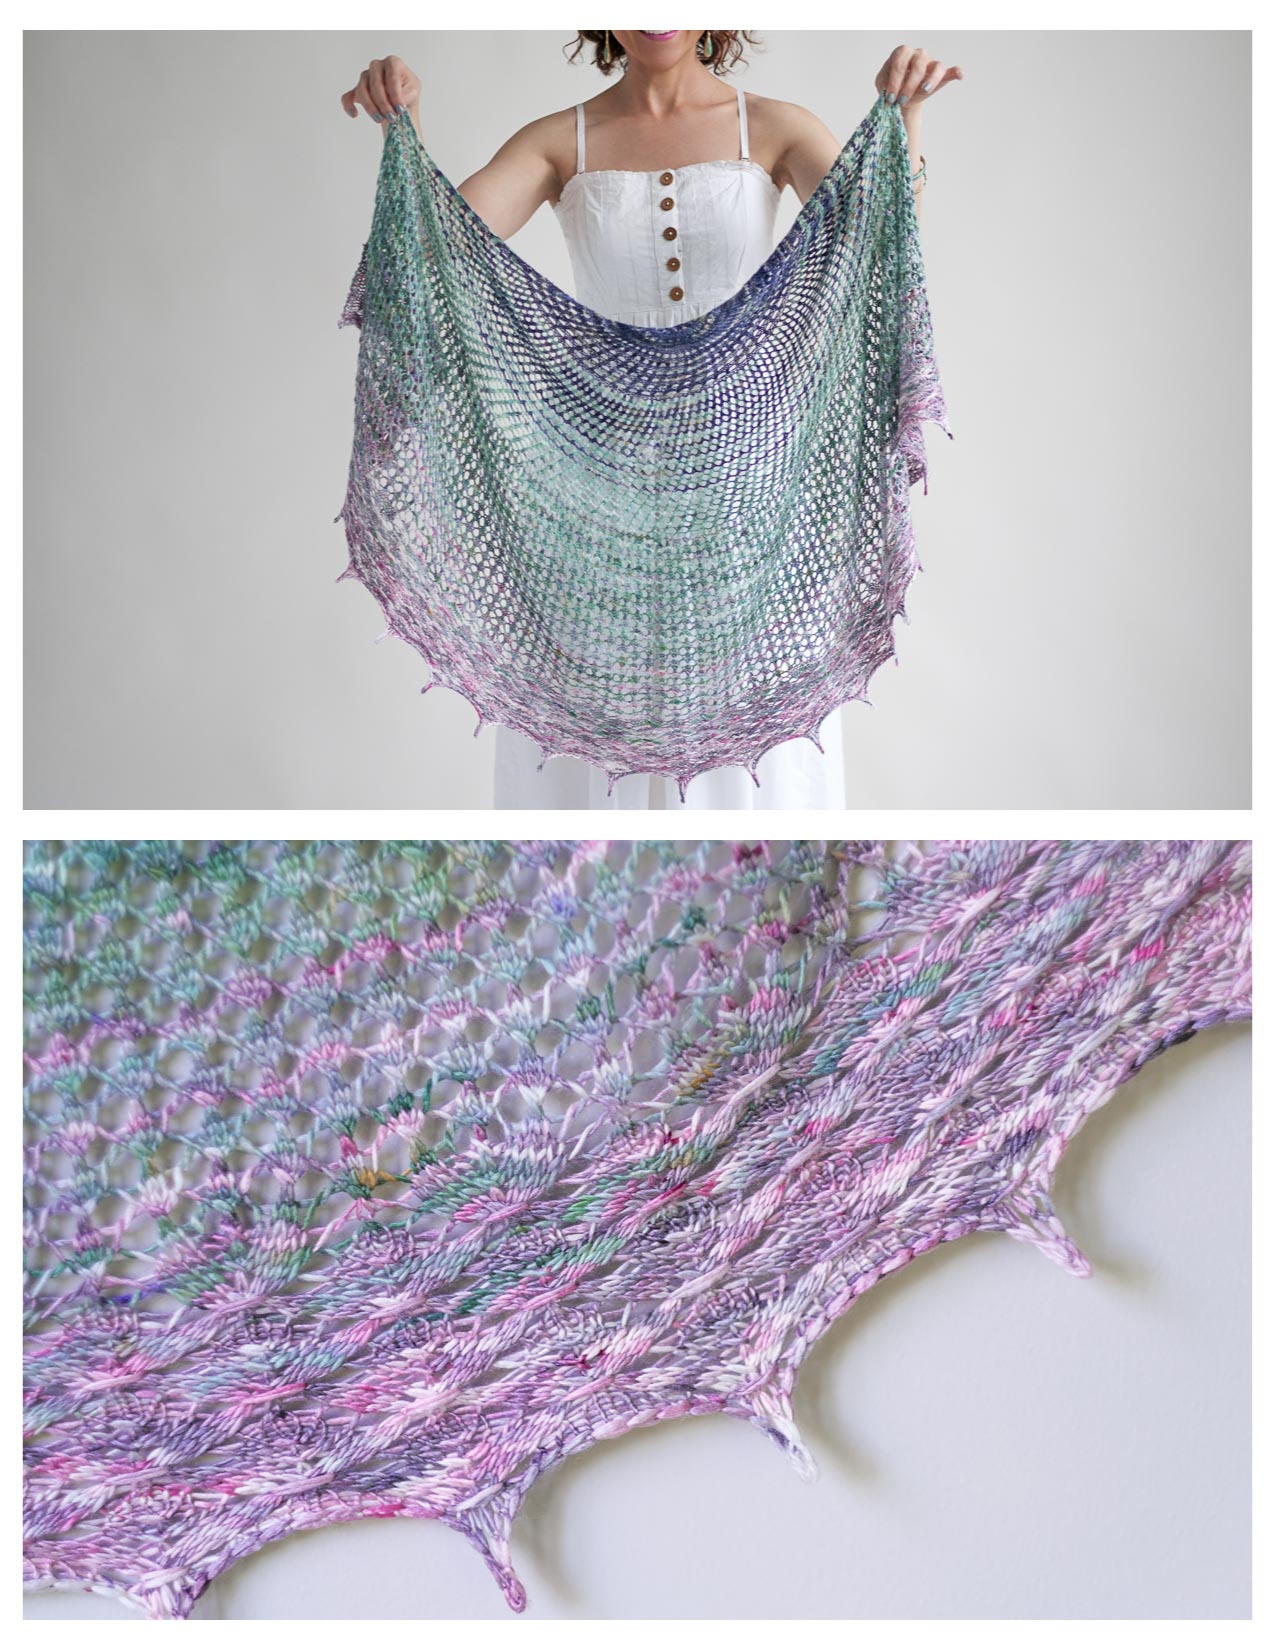 Ondinea   A Knitted Shawl Pattern Inspired by Wa ...